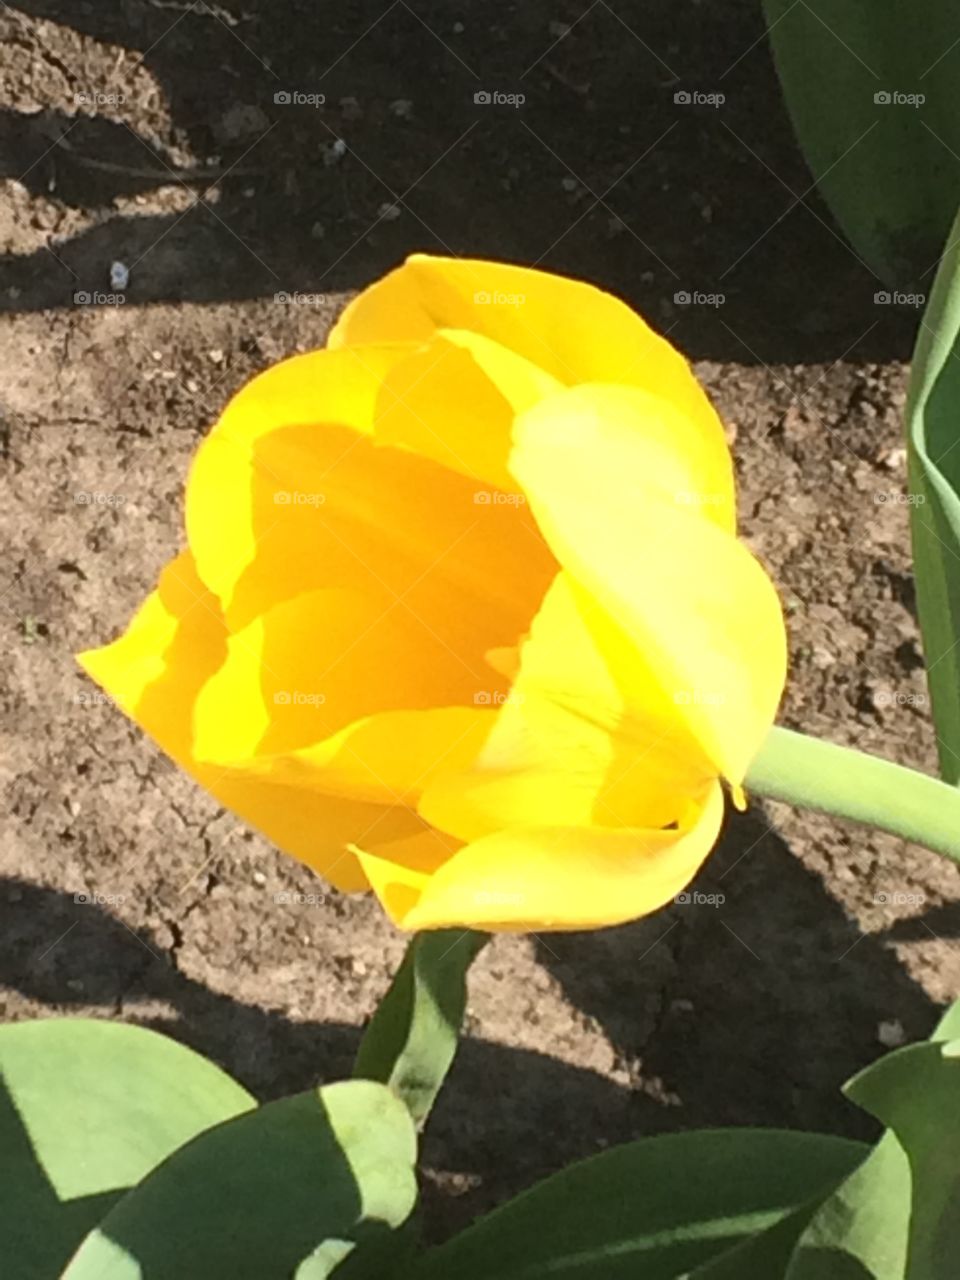 Tulip opened today